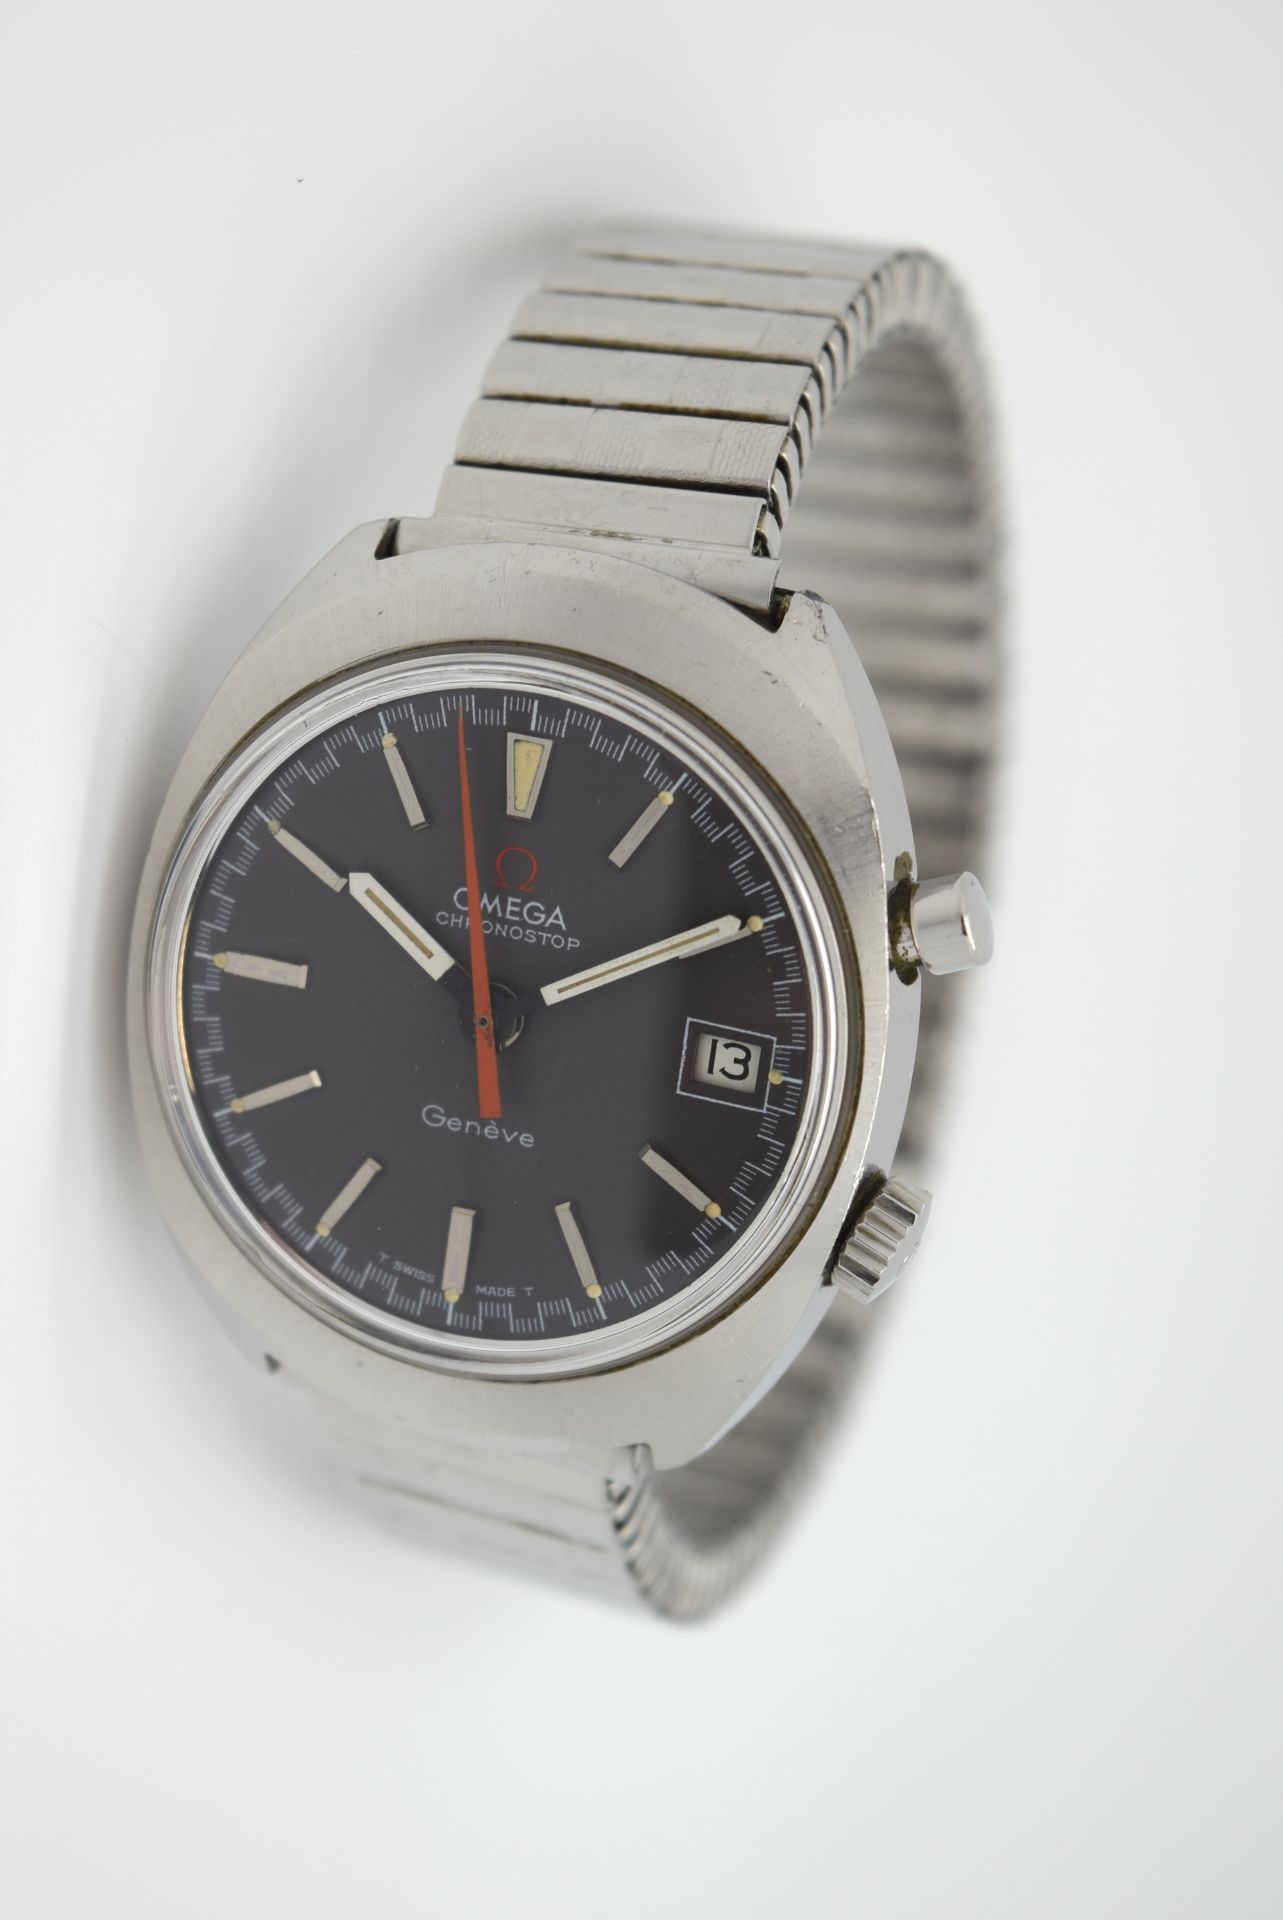 RARE Omega Chronostop Genève Ref. 146.009 Vintage Wristwatch, Circa 1969 - Image 4 of 7